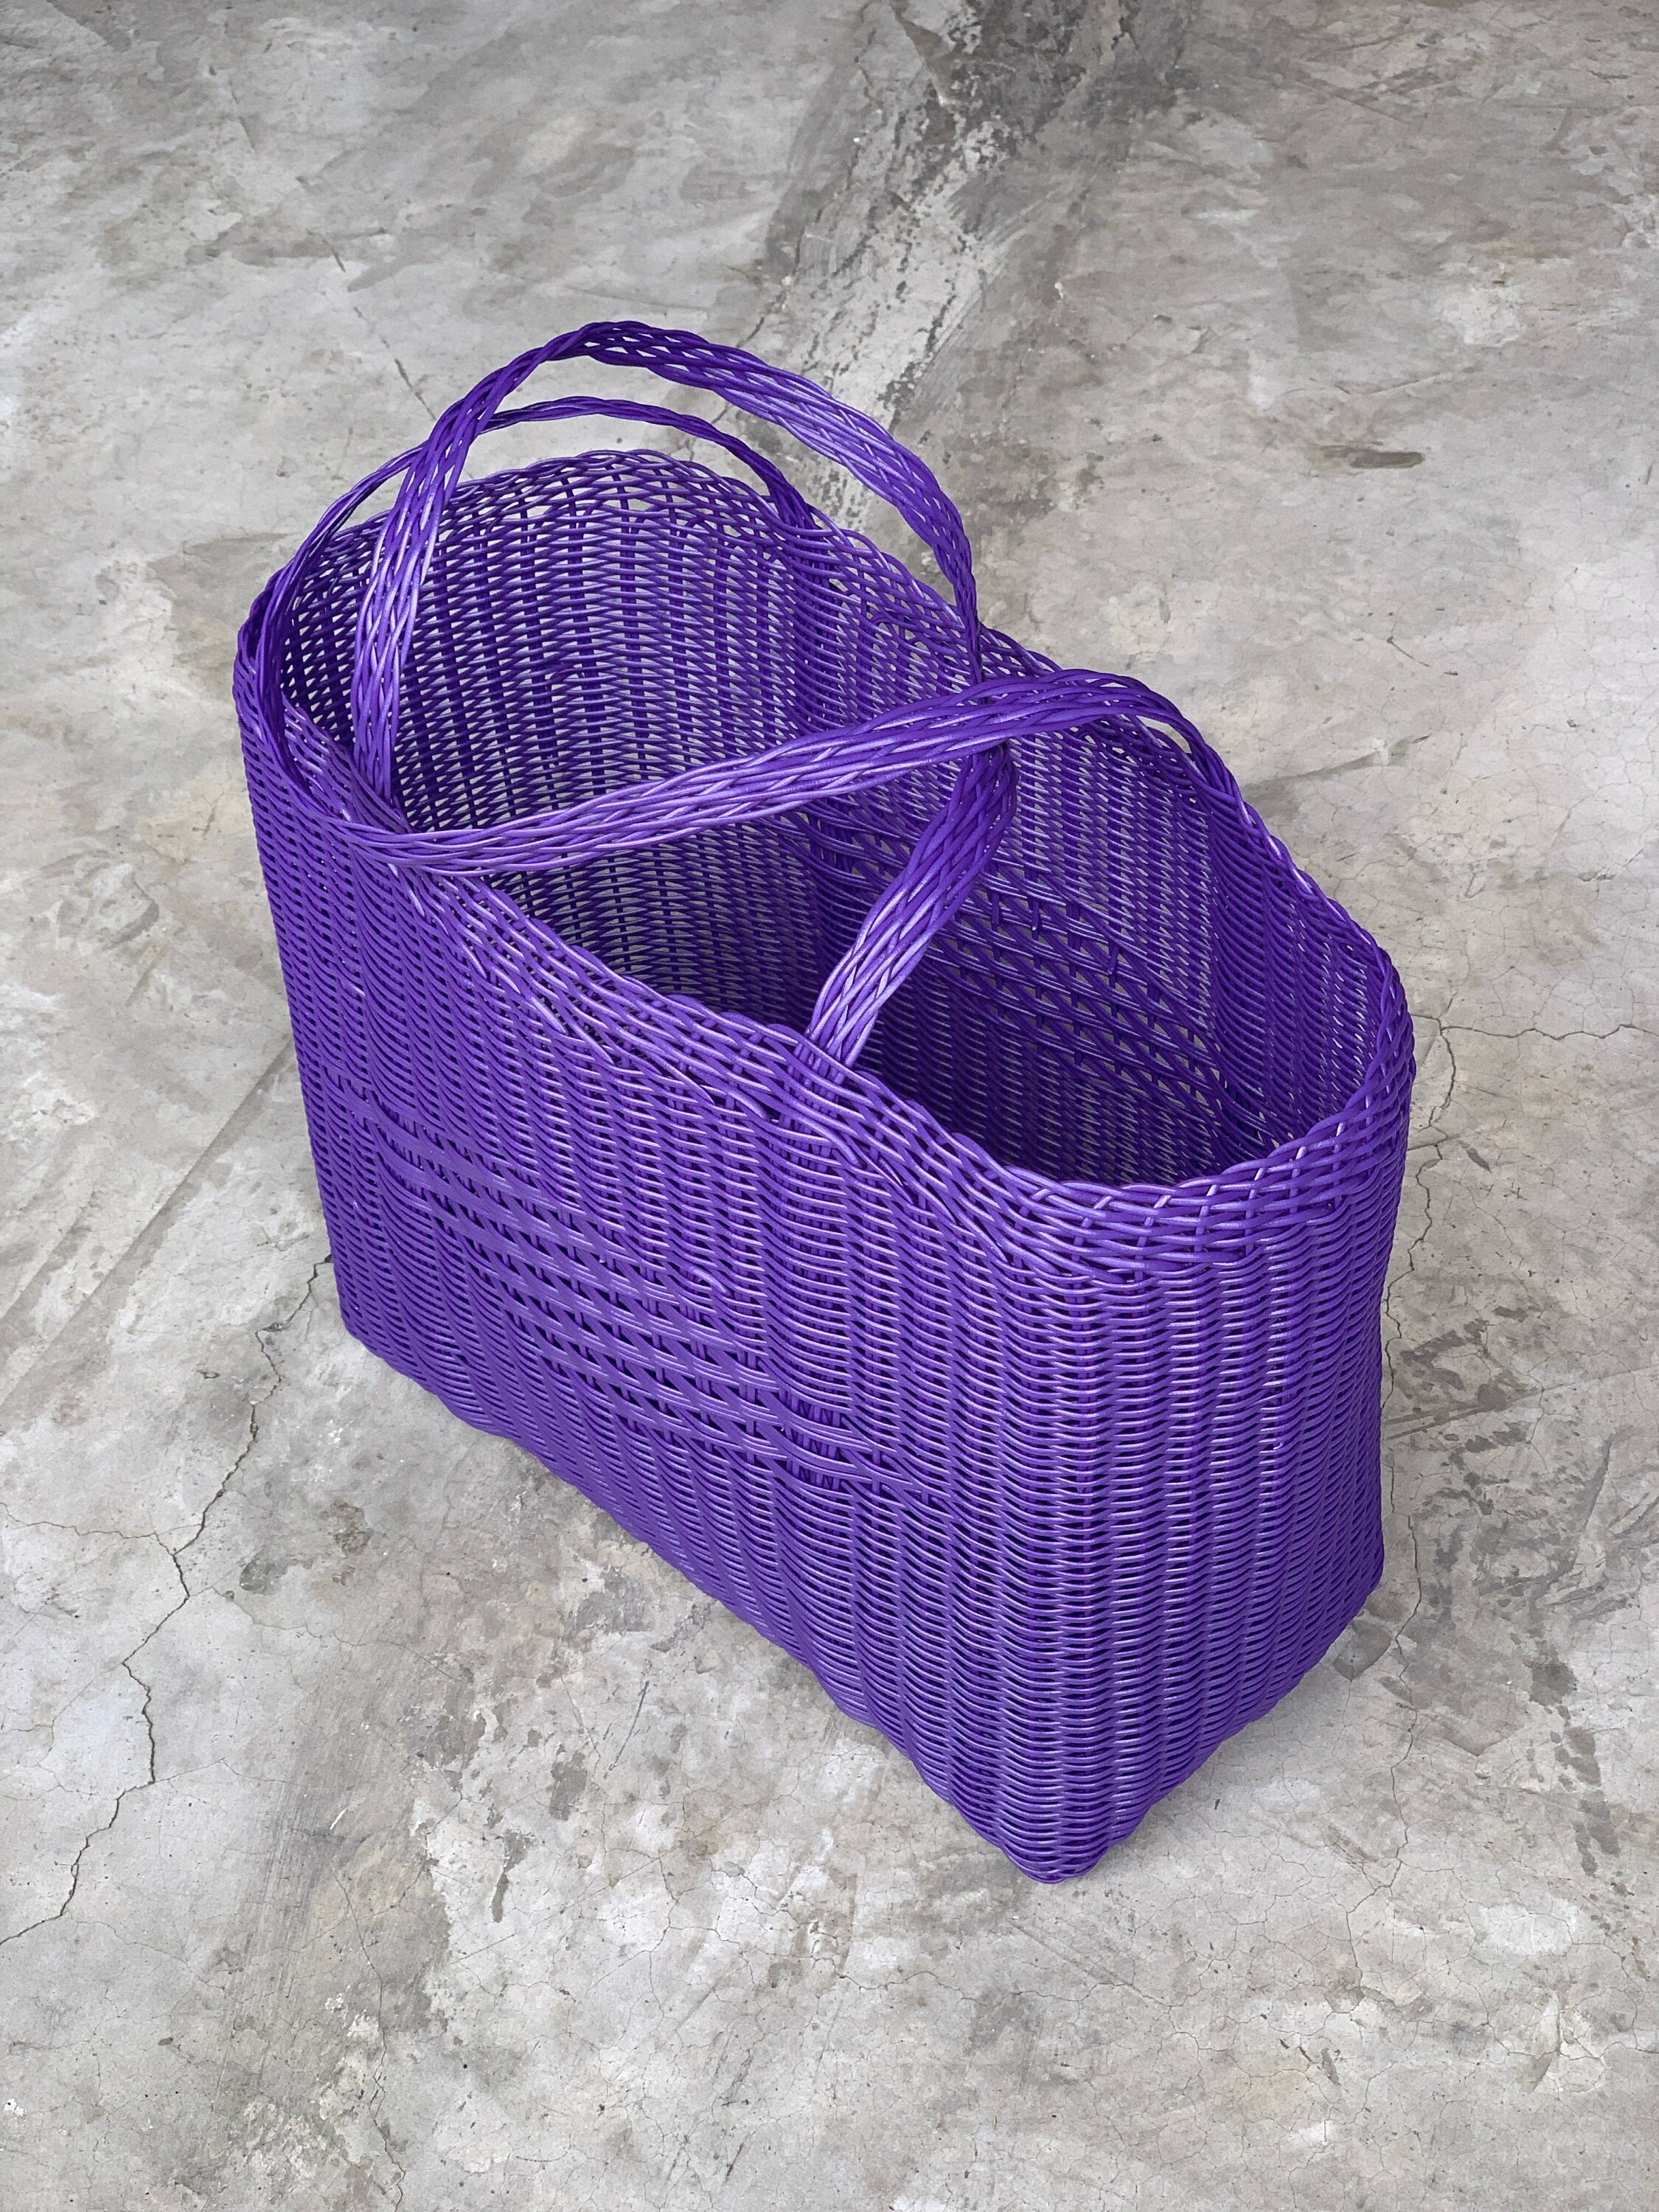 Woven Guatemalan Metallic Green Plastic Market Basket Strong Resistant Bag Bright Colors